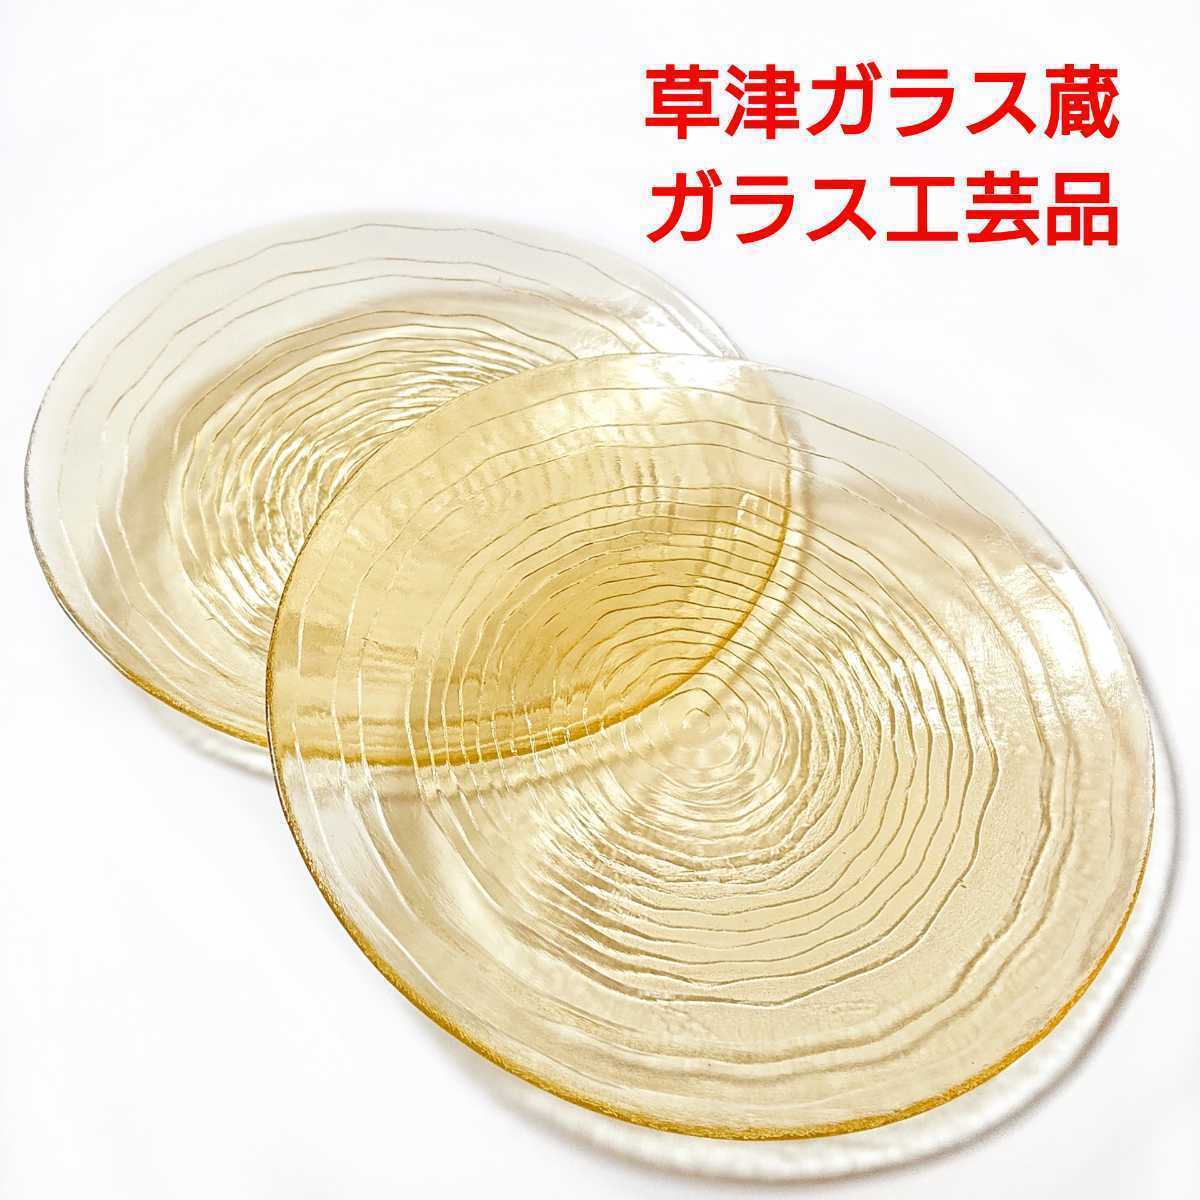 Kusatsu Onsen/Kusatsu Glass Store/Artesanía en vidrio/Plato de vidrio/Hecho a mano/Amarillo, vajilla occidental, lámina, plato, otros